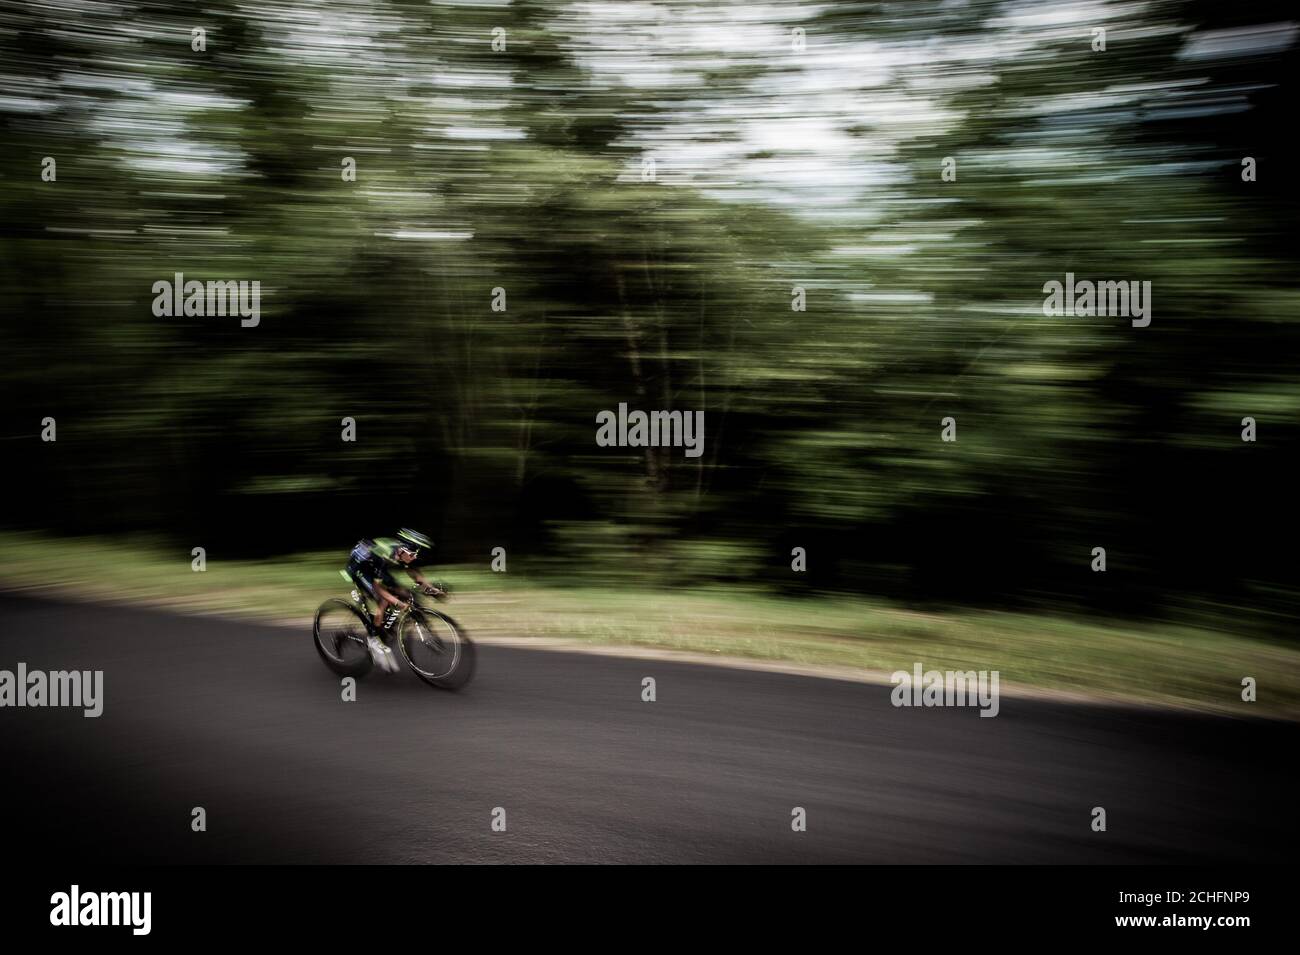 9 luglio 2017, Mont du Chat, Francia; Ciclismo, Tour de France 9° tappa: Nairo Quintana discendente del Mont du Chat. Foto Stock